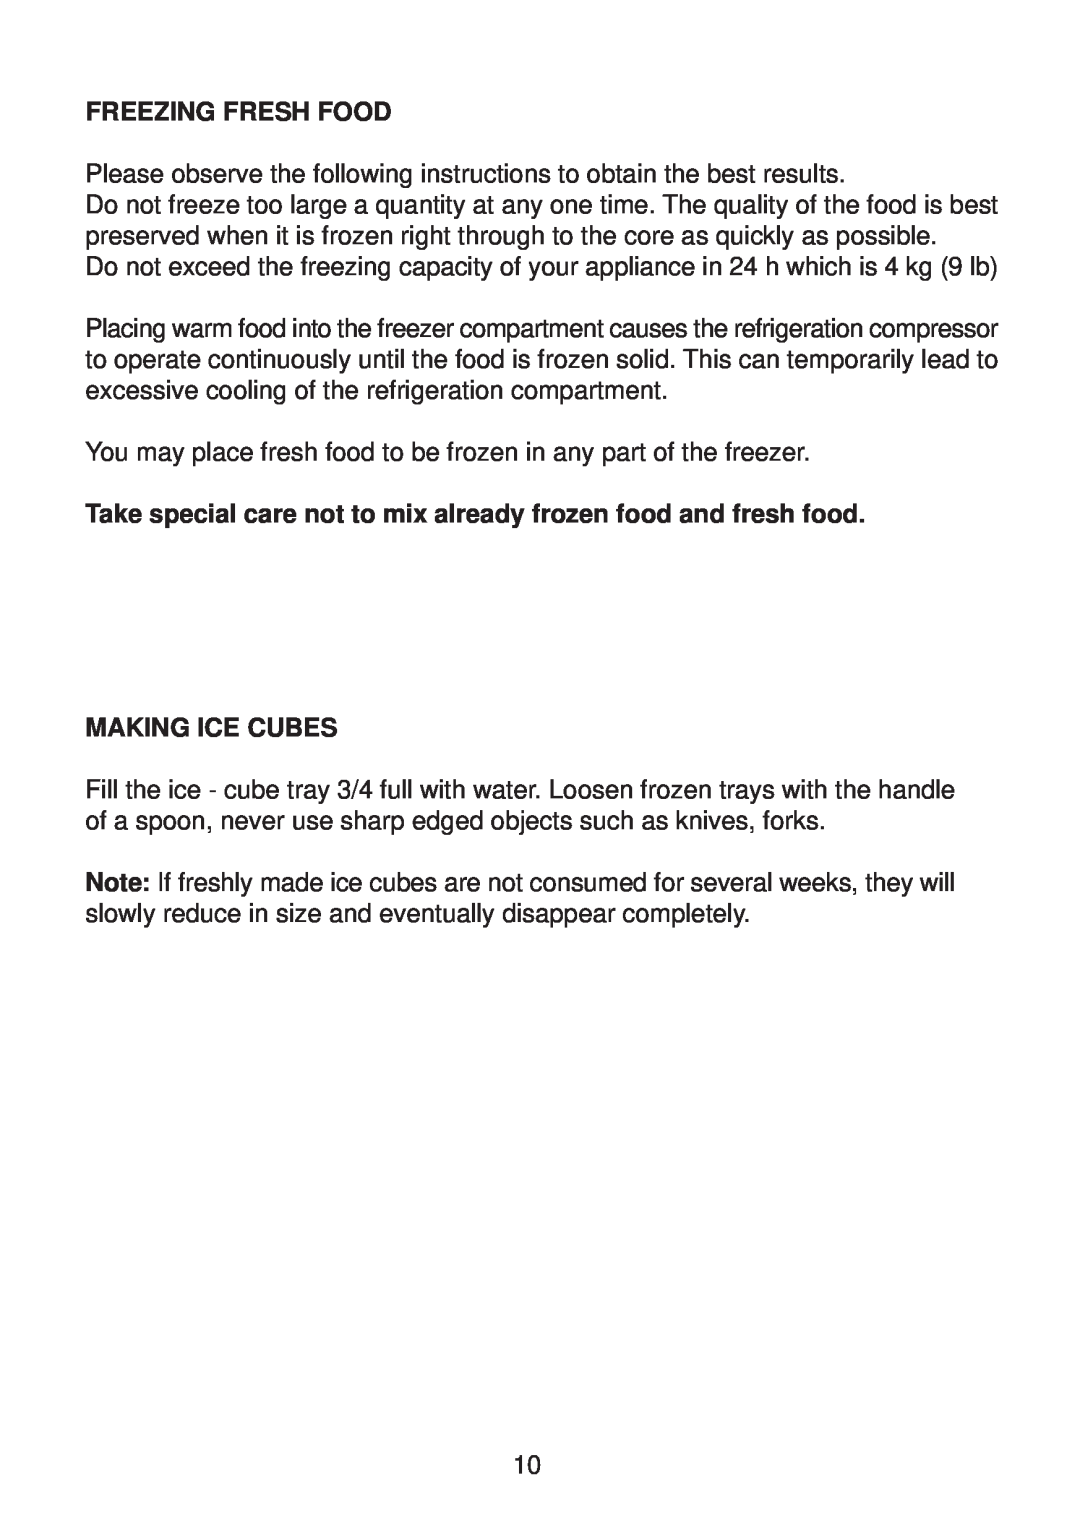 Glen Dimplex Home Appliances Ltd BE817 manual Freezing Fresh Food, Making Ice Cubes 